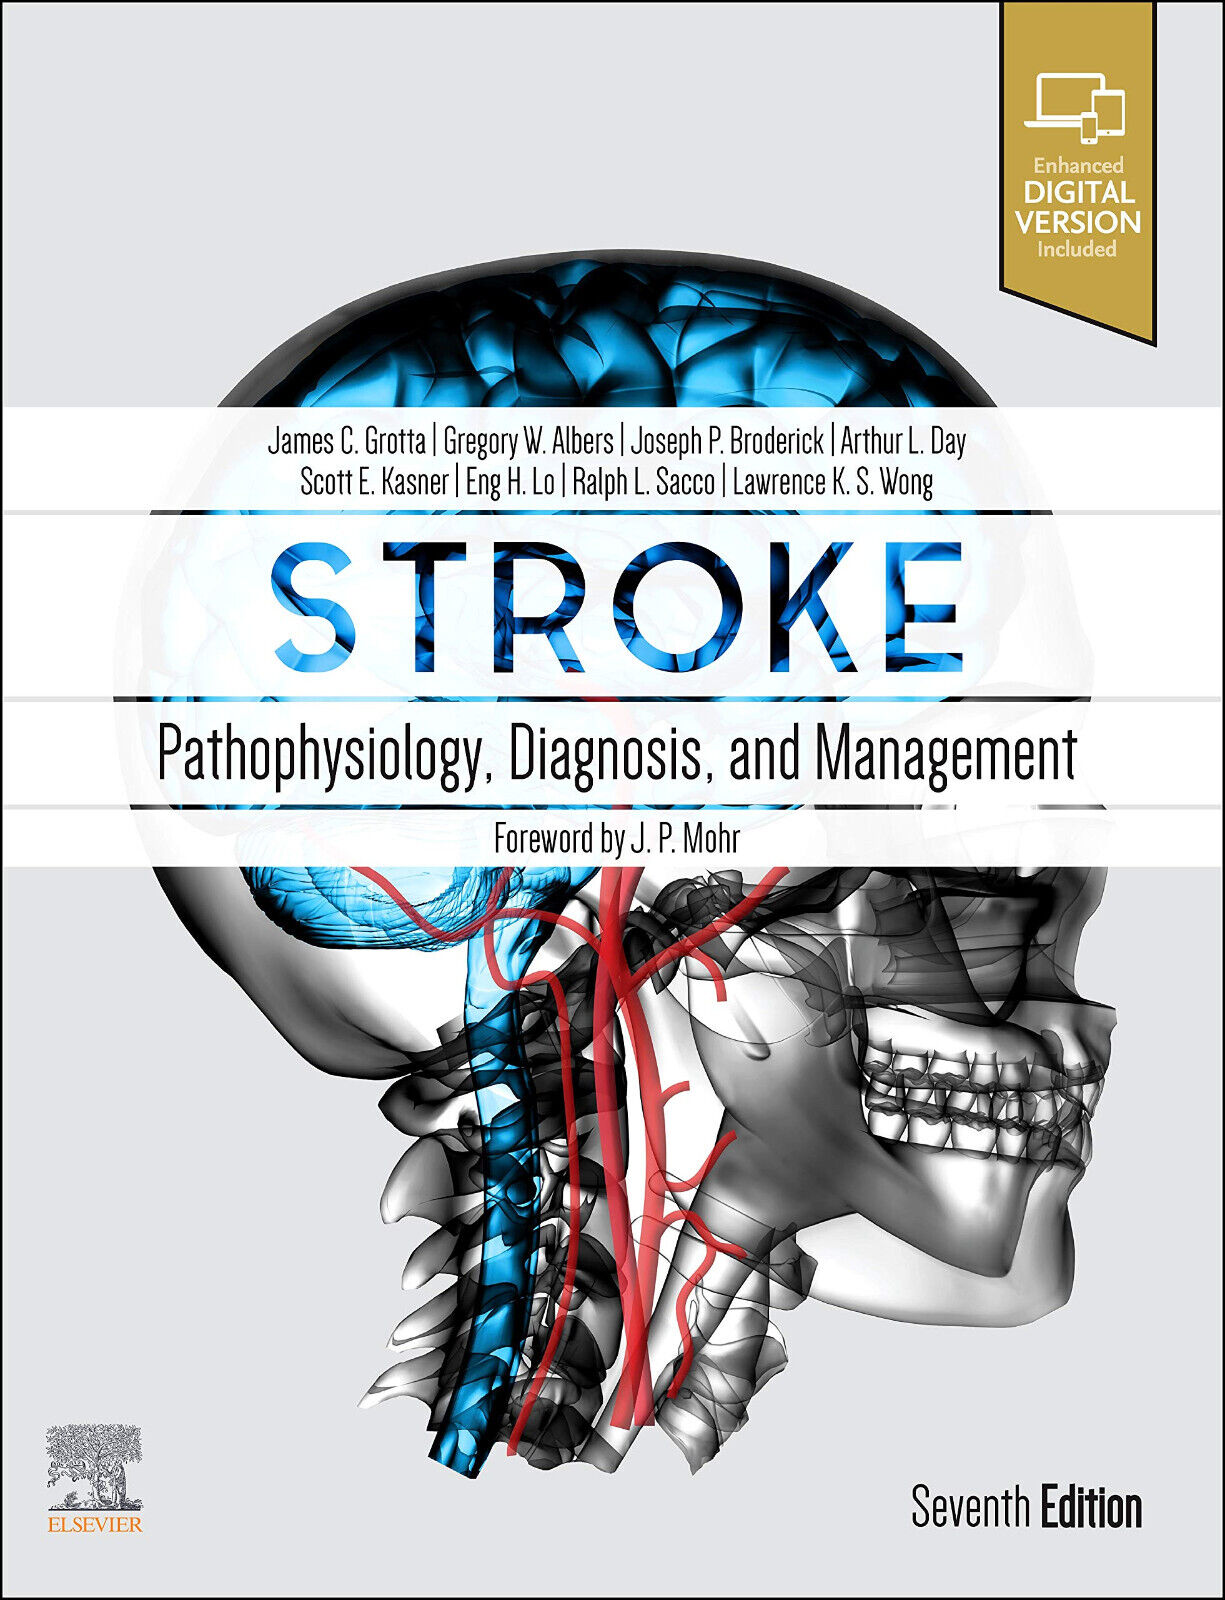 Stroke: Pathophysiology, Diagnosis, and Management - Elsevier, 2021